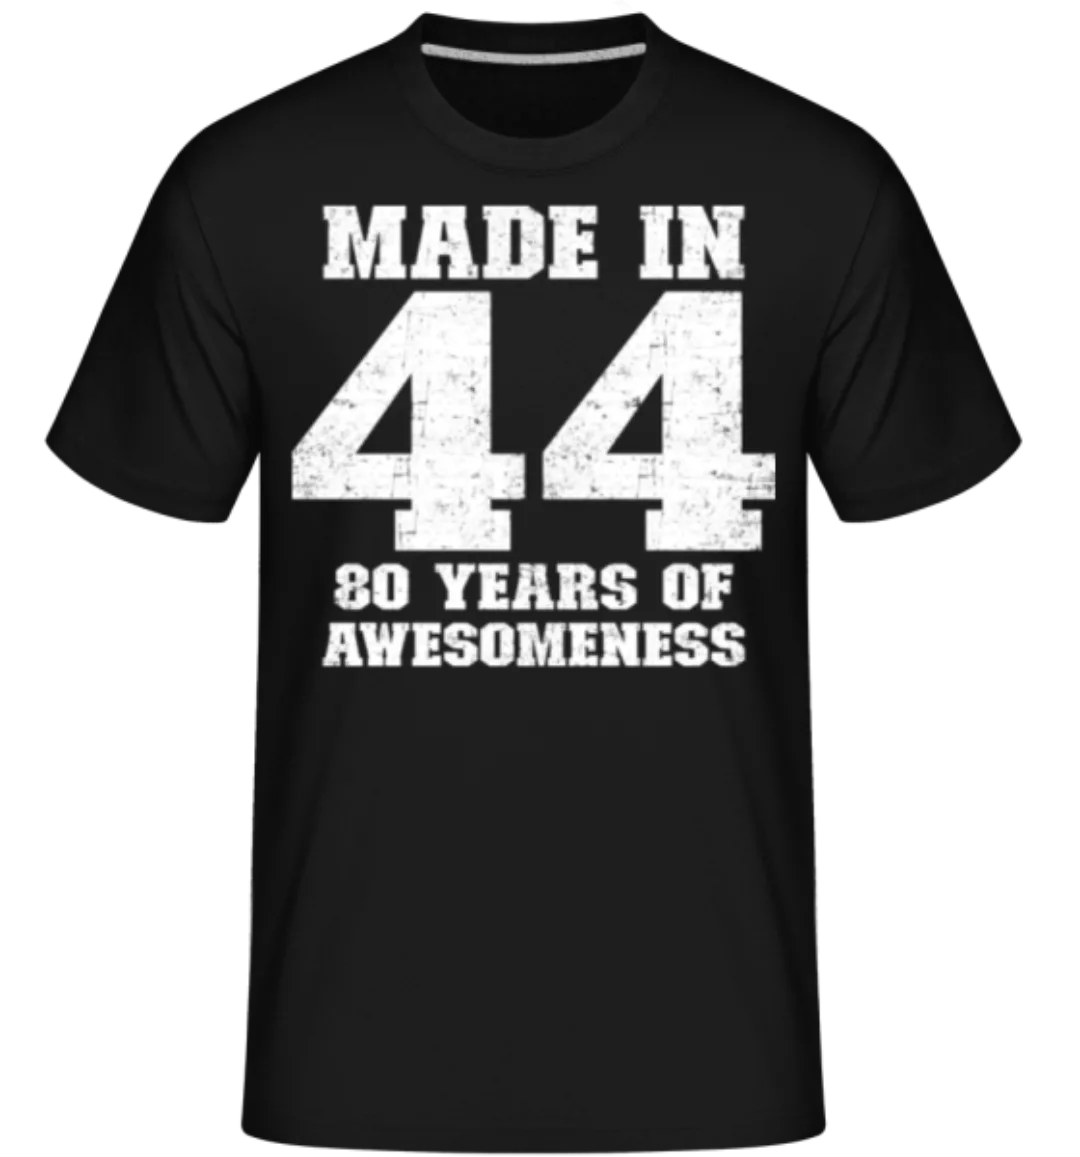 80 Years Of Awesomeness · Shirtinator Männer T-Shirt günstig online kaufen